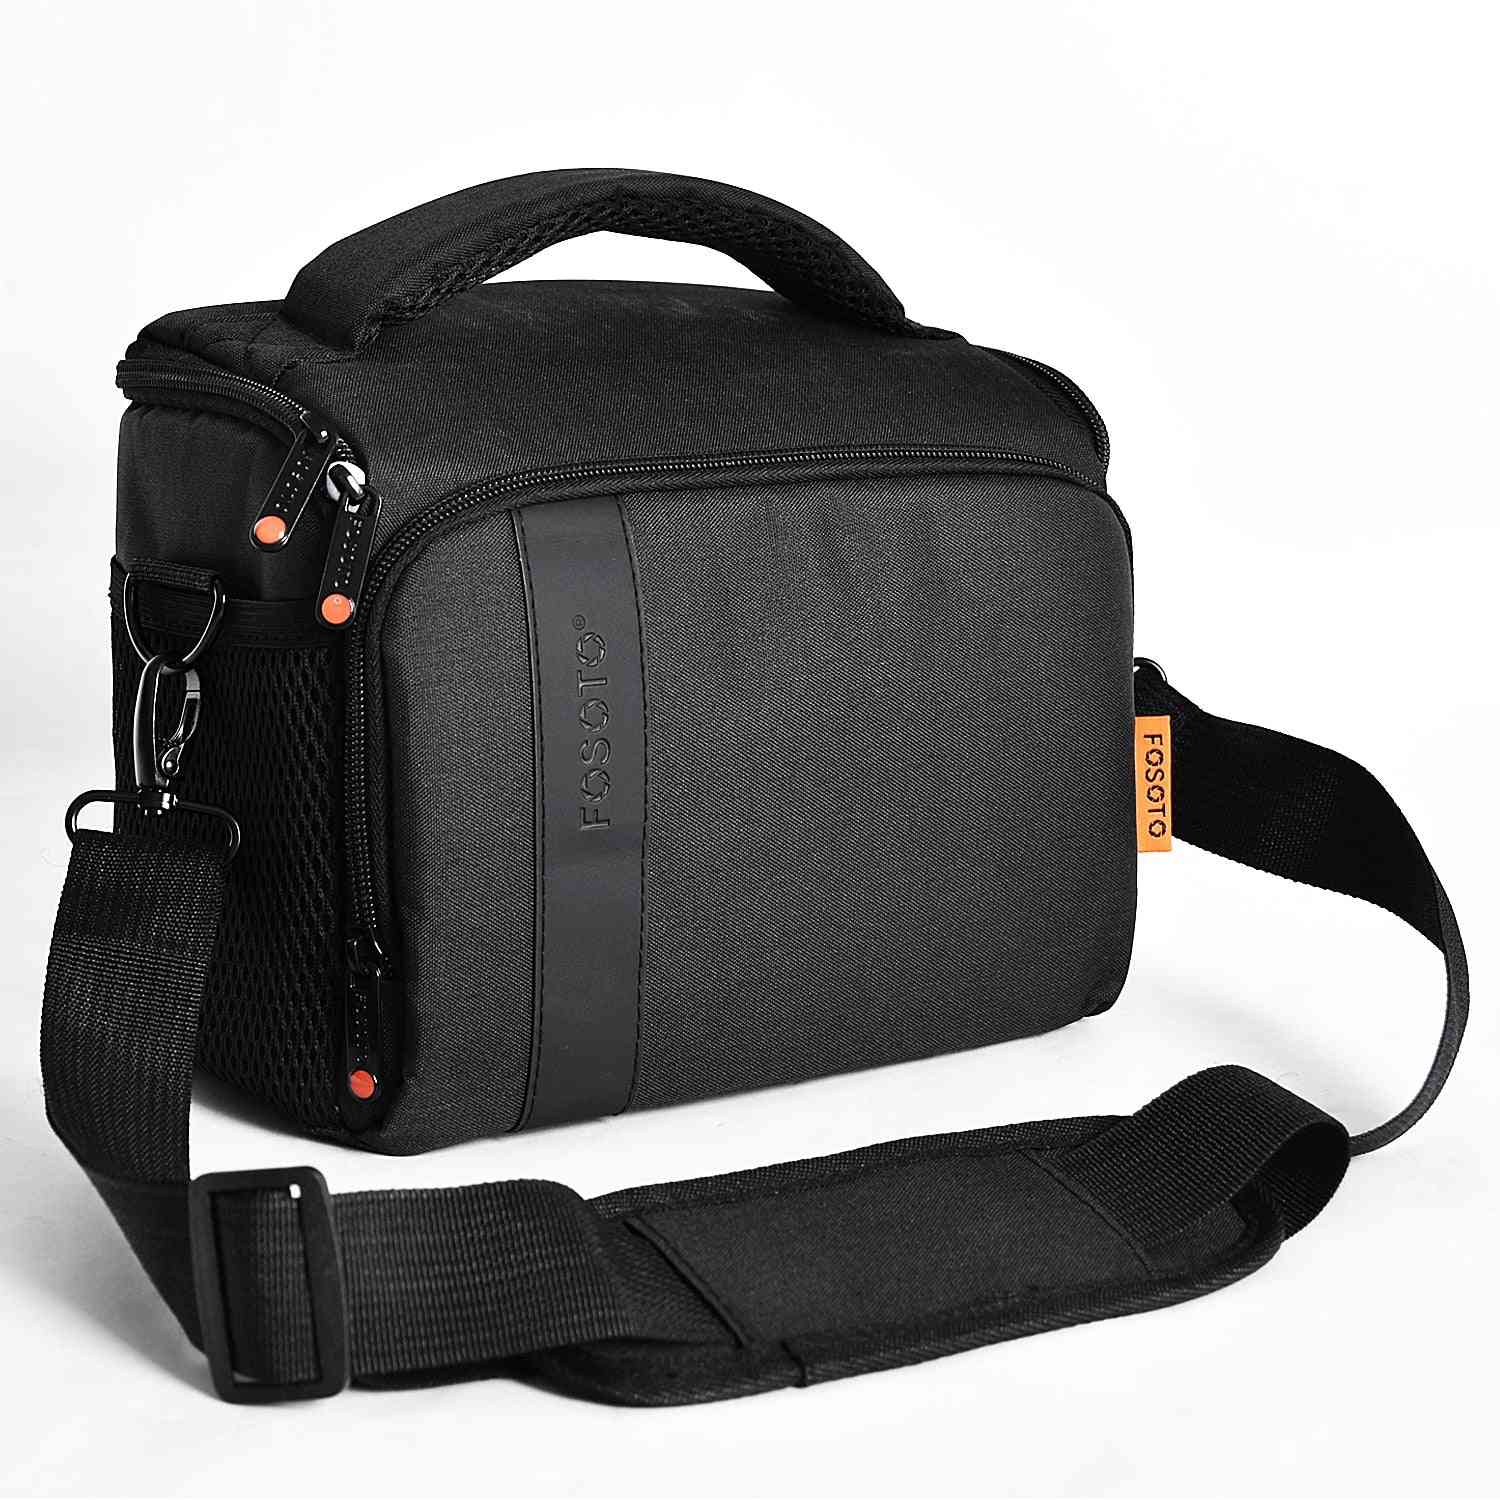 Digital Dslr Waterproof Shoulder Bag, Video Camera Case For Canon/nikon/sony